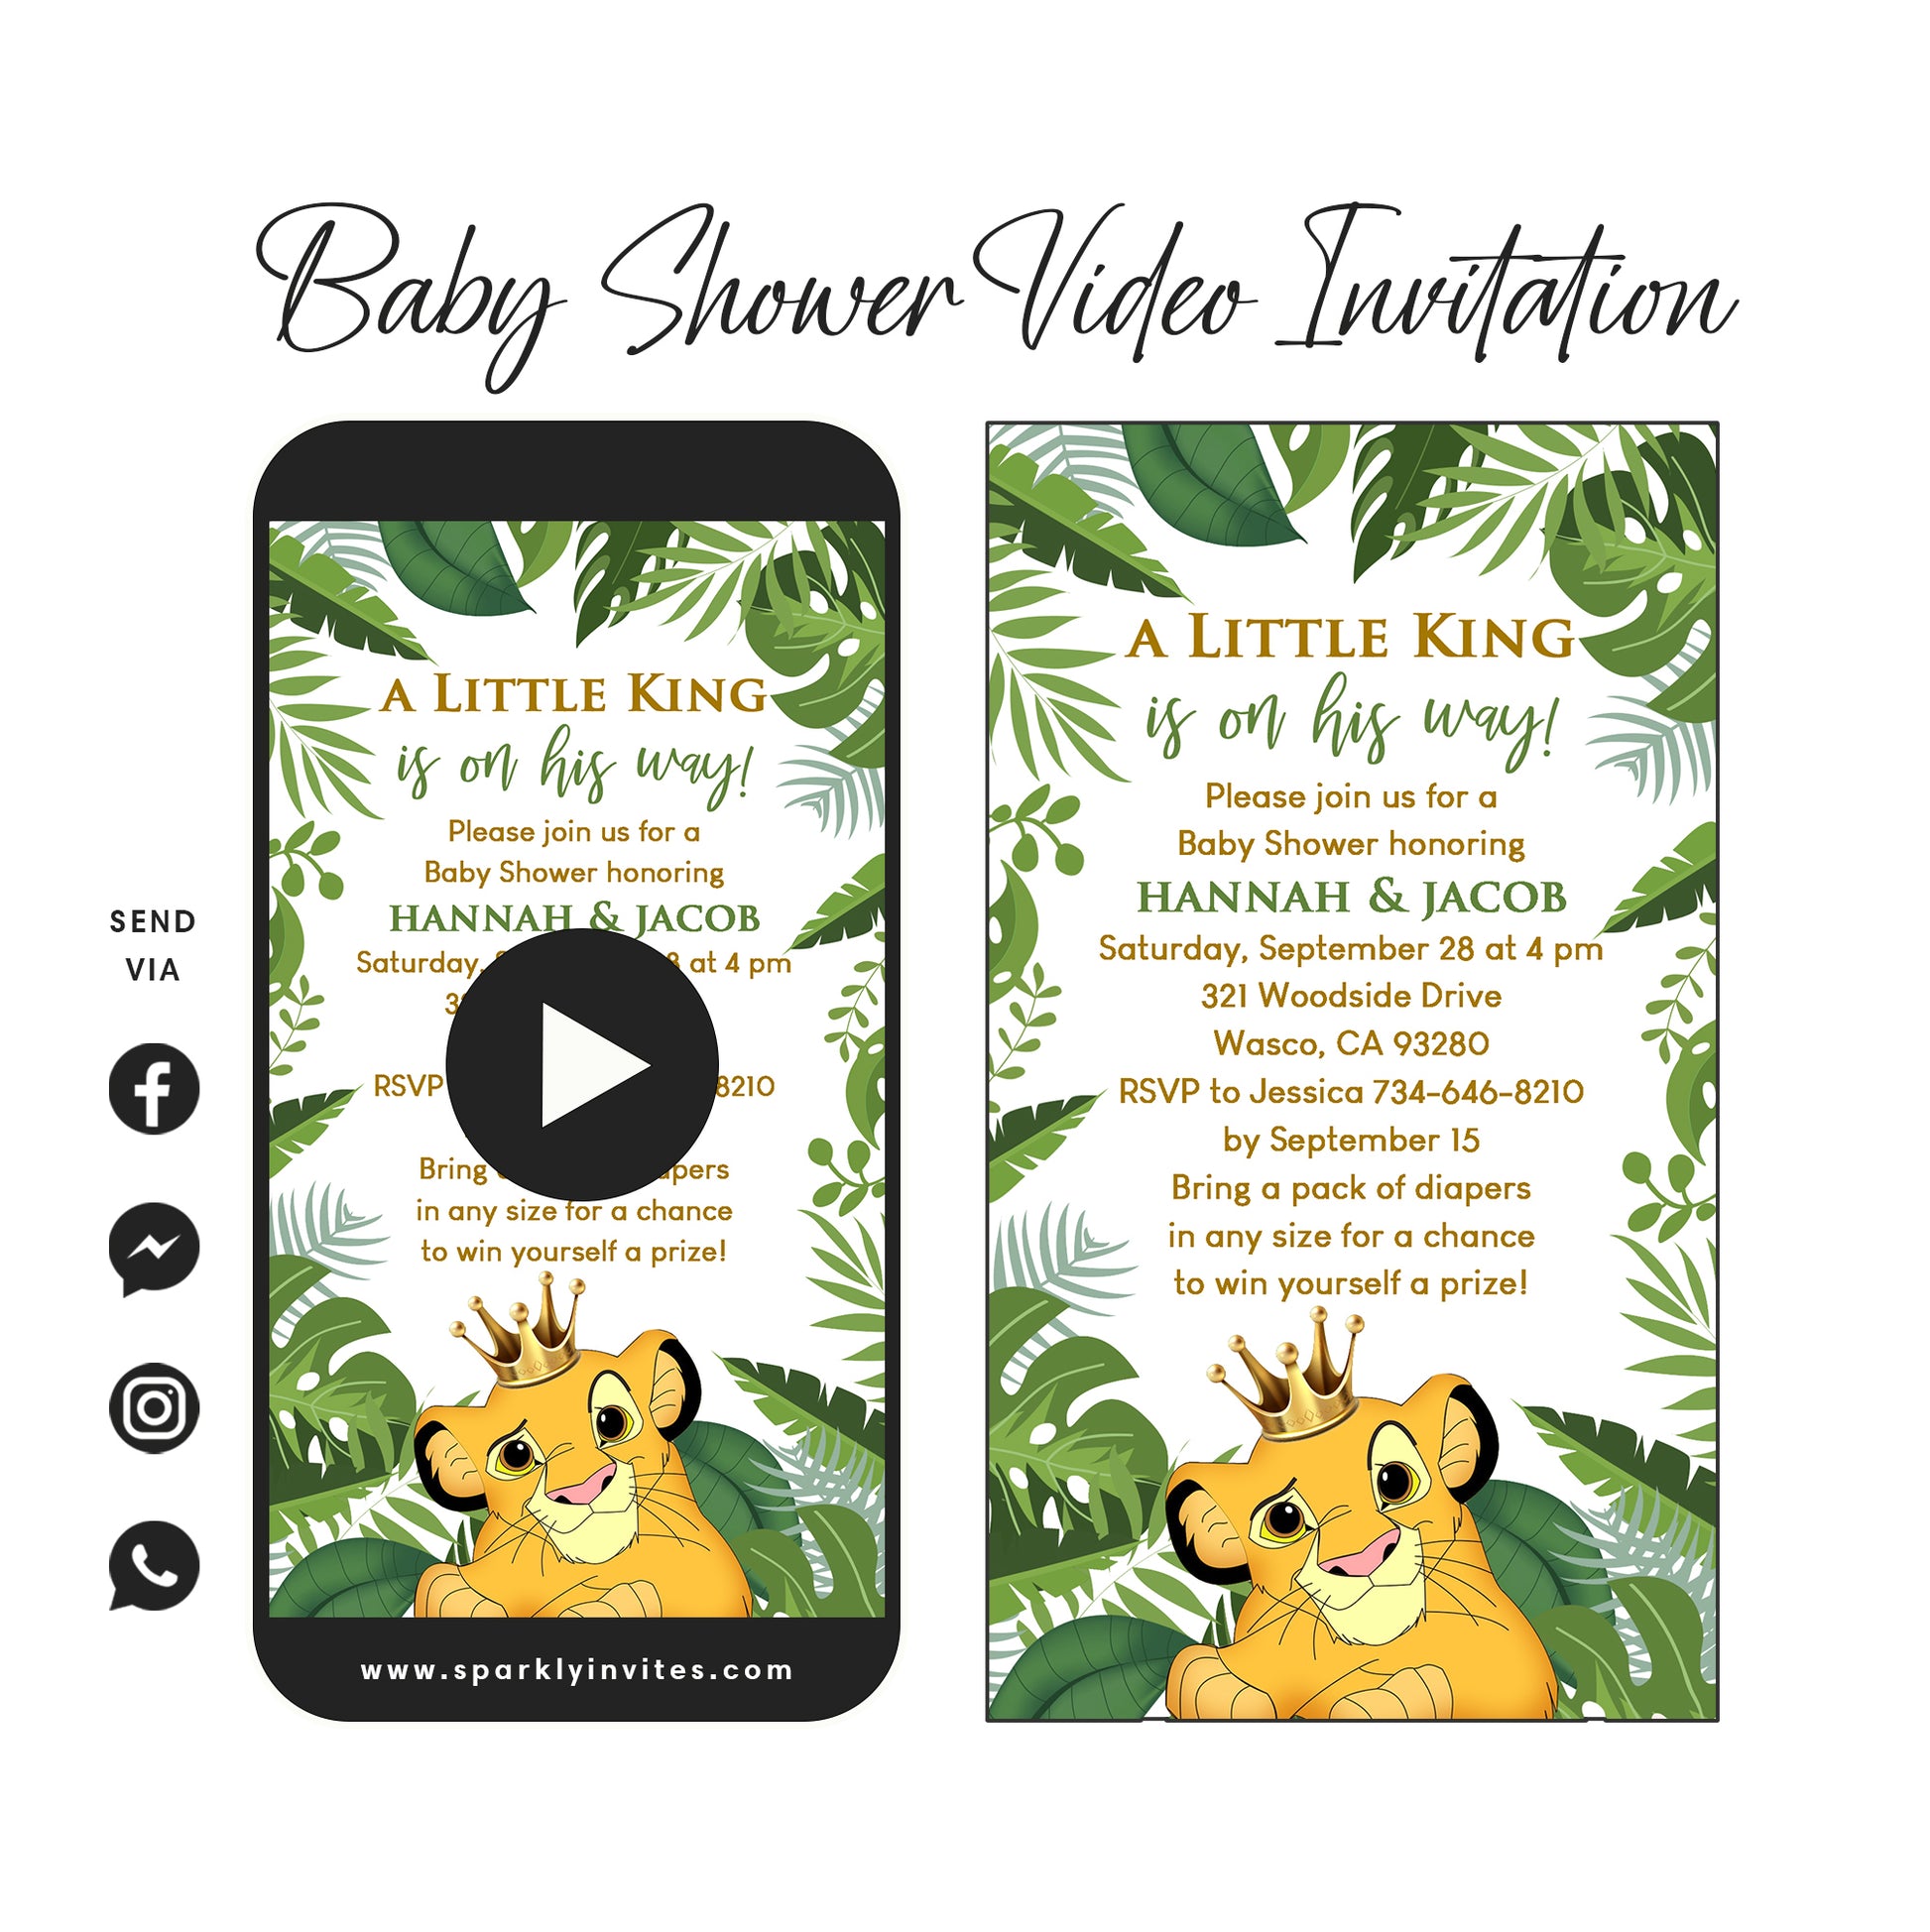 Simba Baby Shower Video Invitation